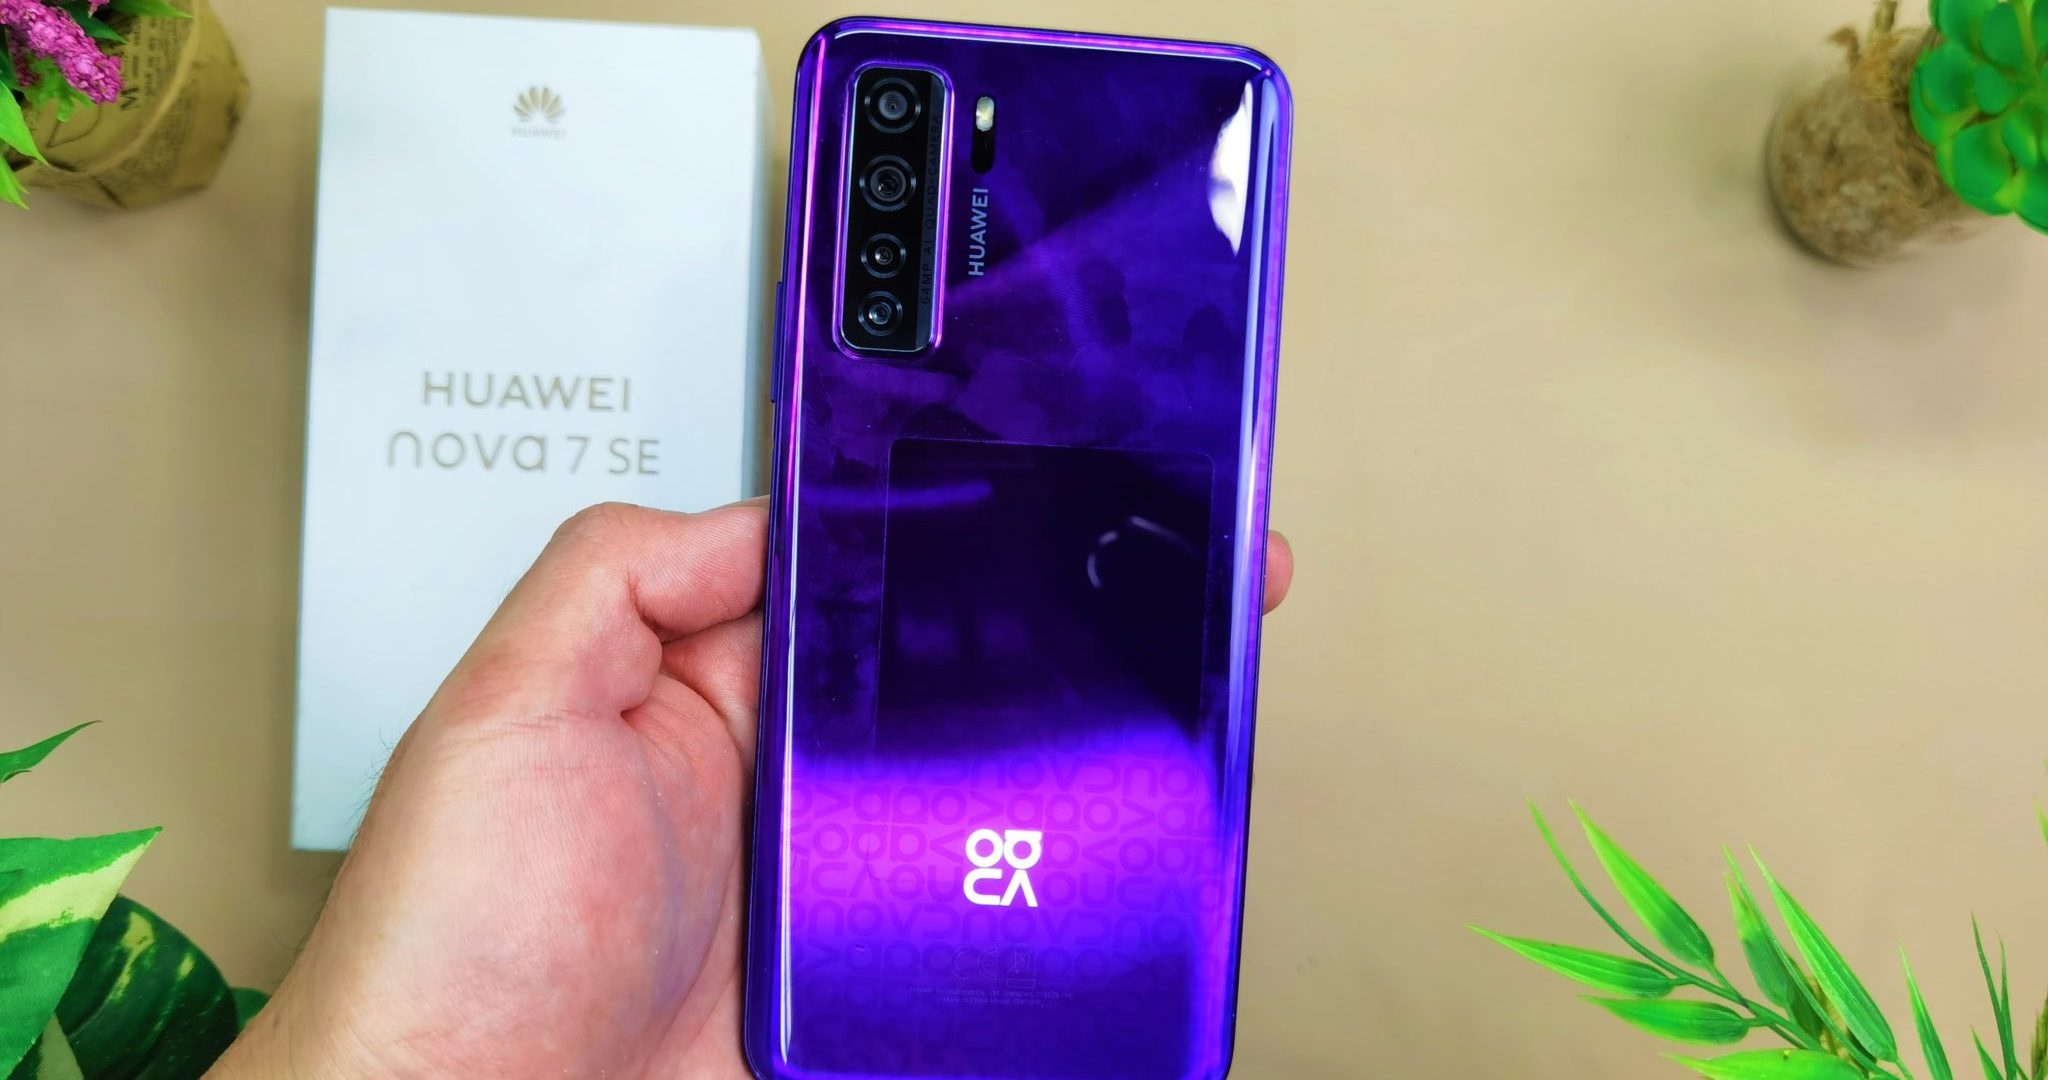 Huawei nova 7 SE Review - Pretty Purple 5G Power Performer ...